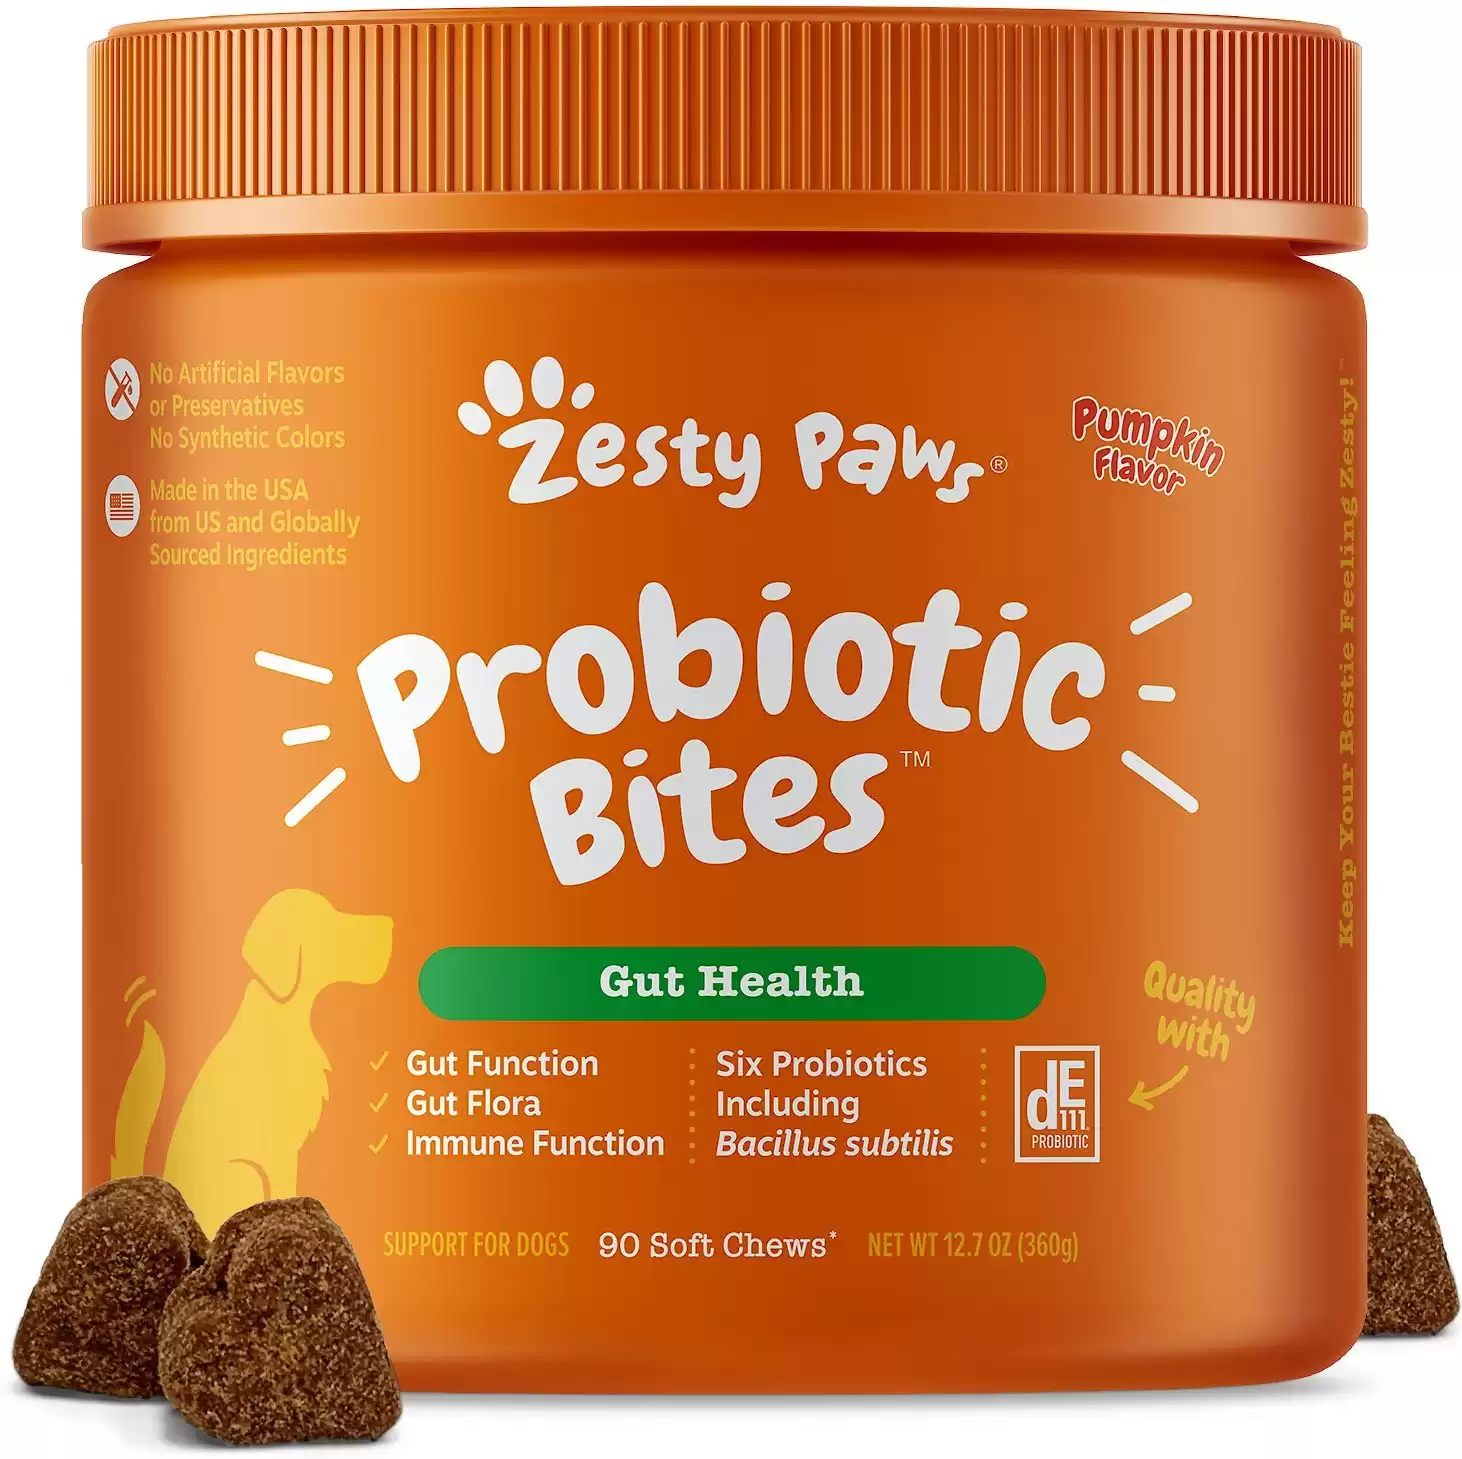 Zesty Paws Probiotic Bites Digestive Supplement